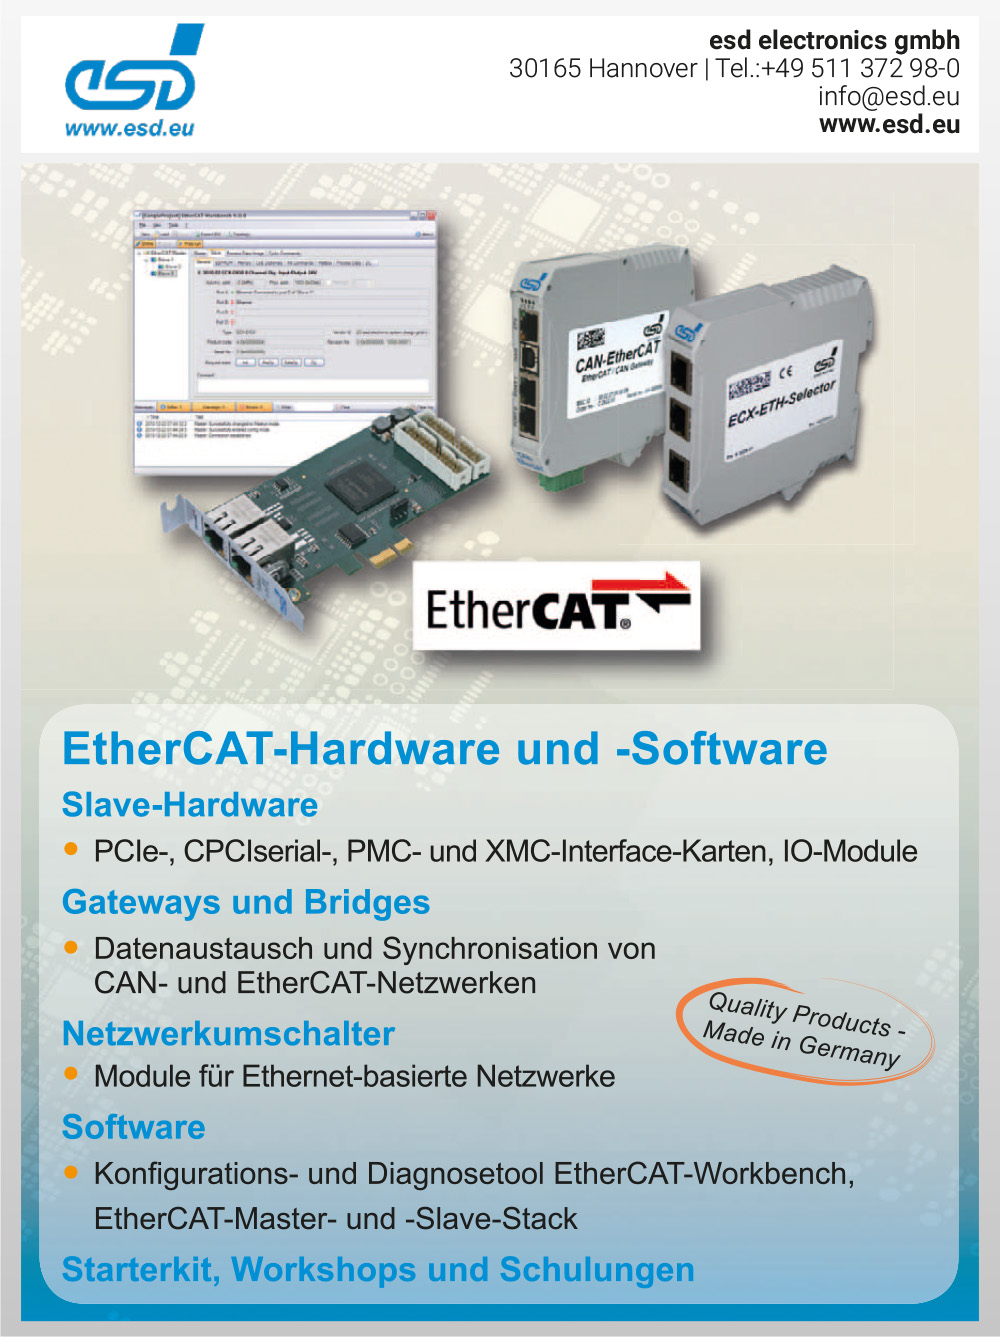 Produktübersicht – esd electronics GmbH